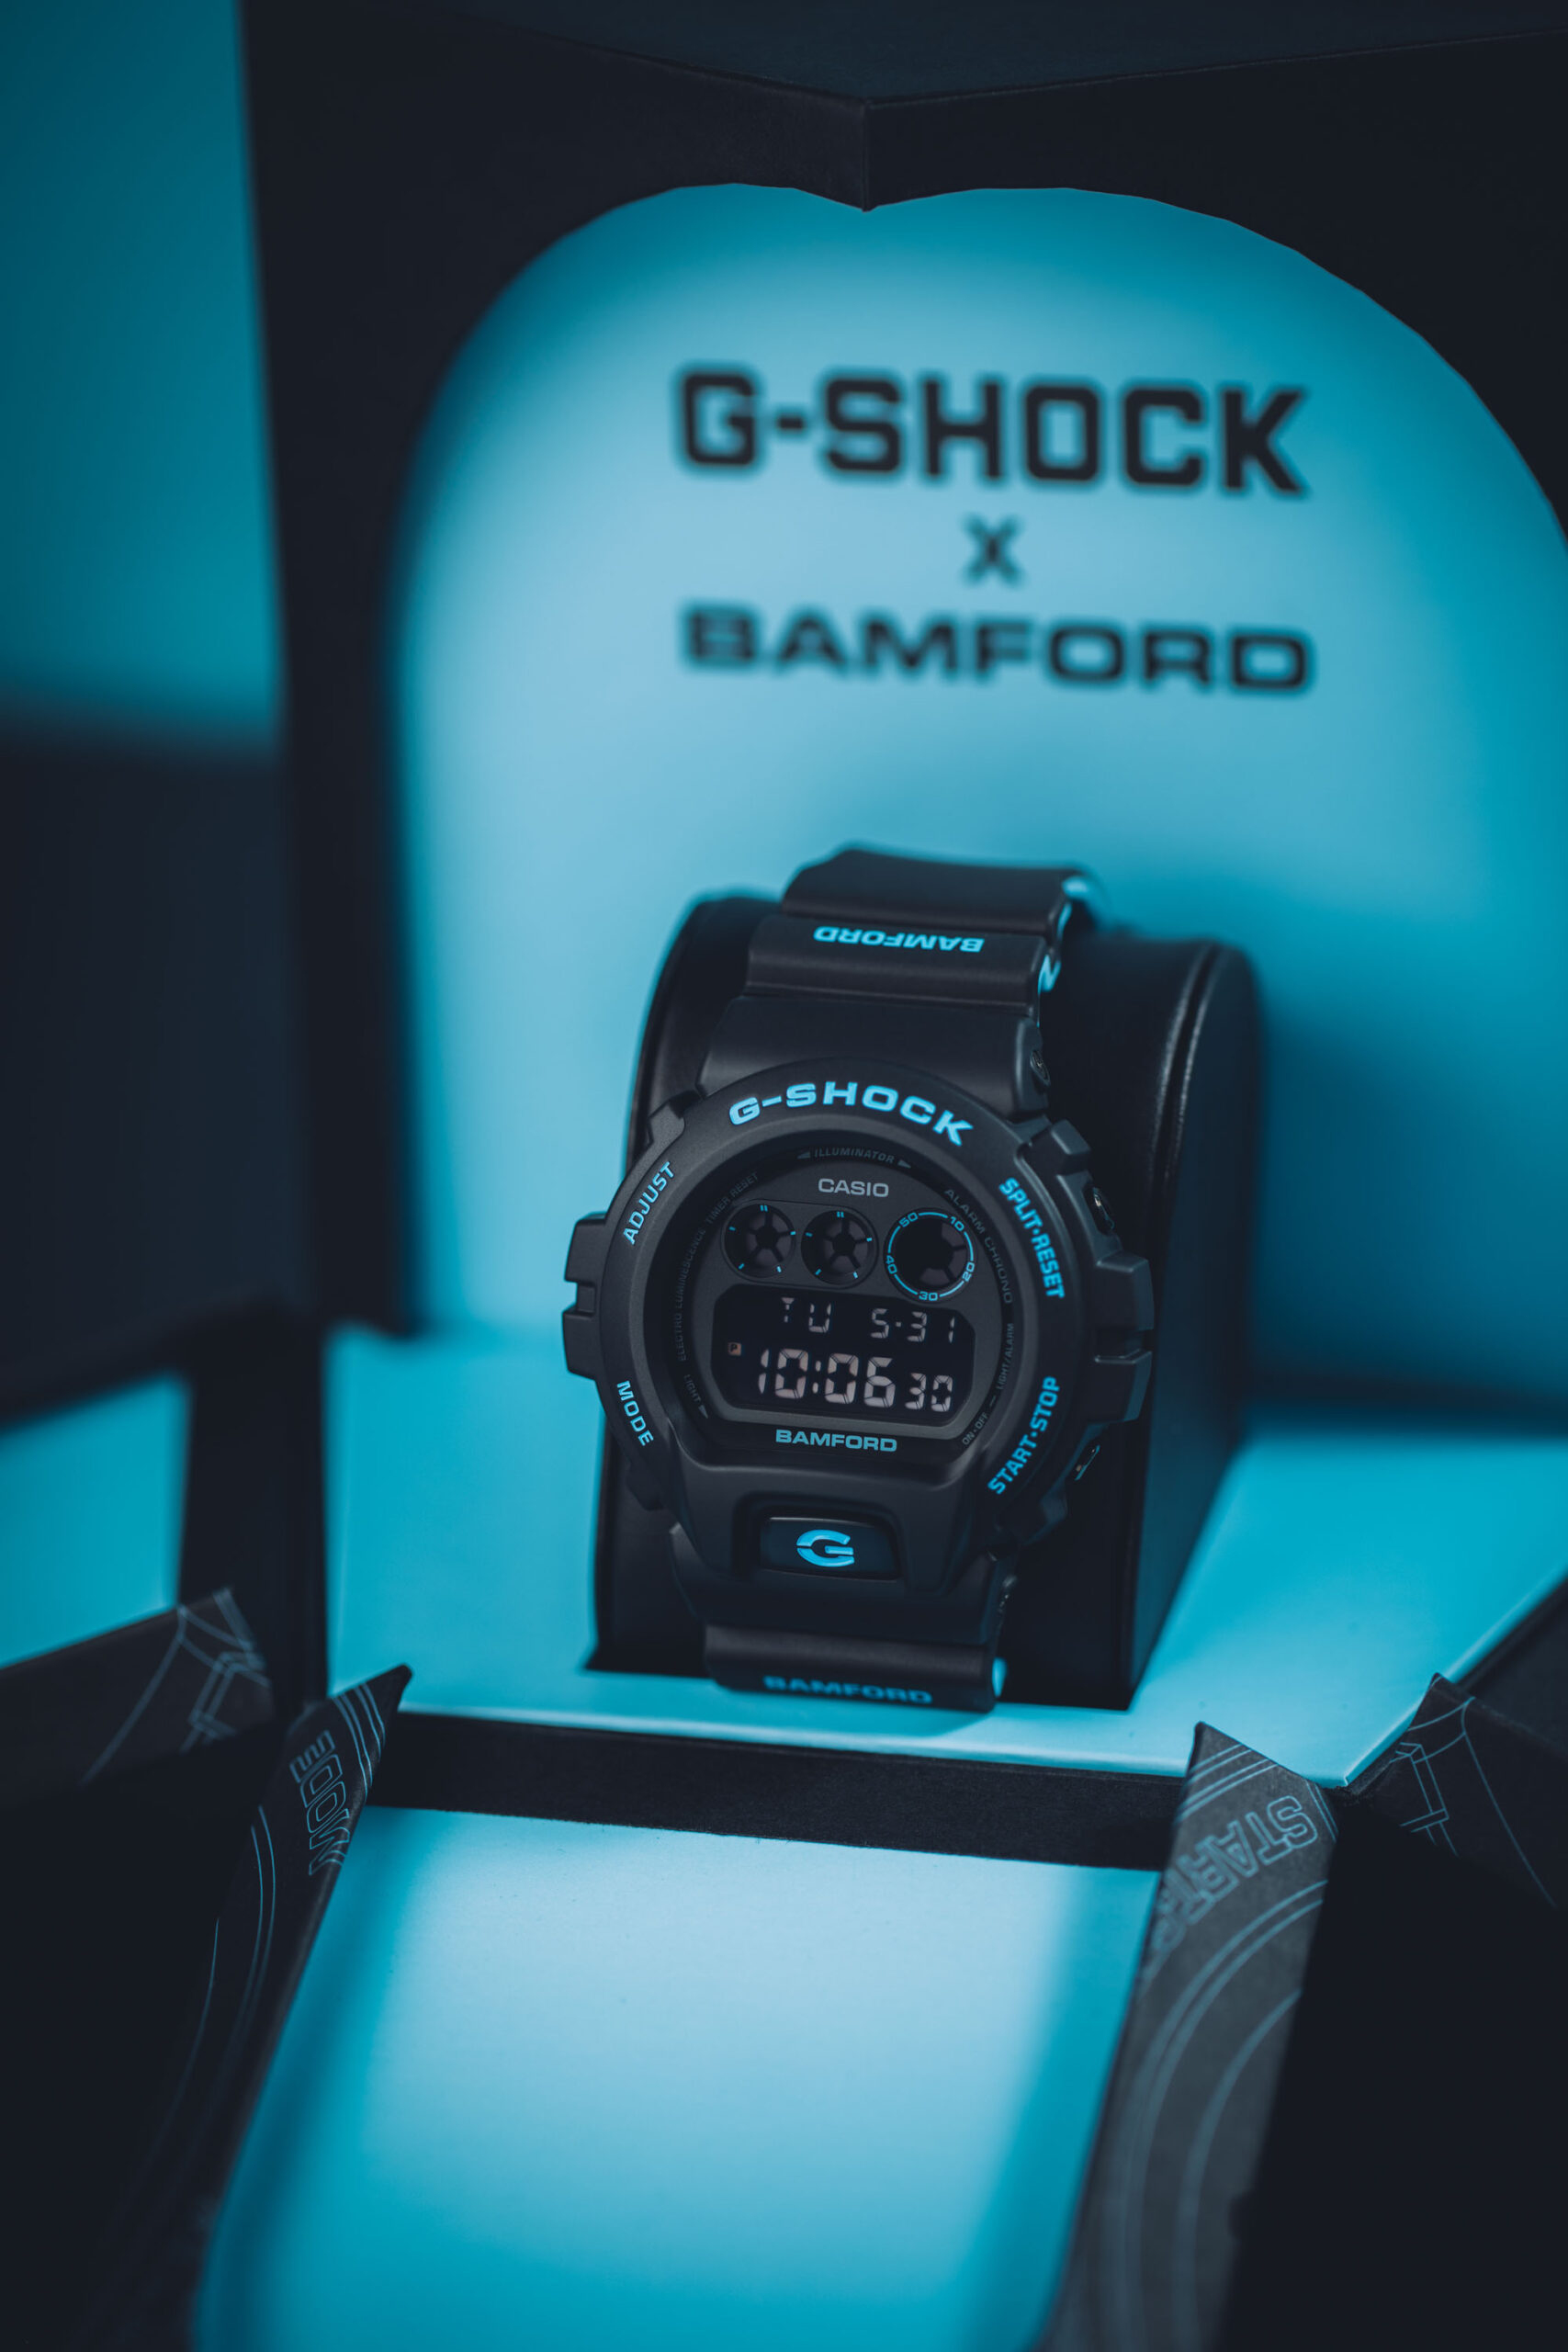 BAMFORD Casio G Shock 2.0 6900 SERIES